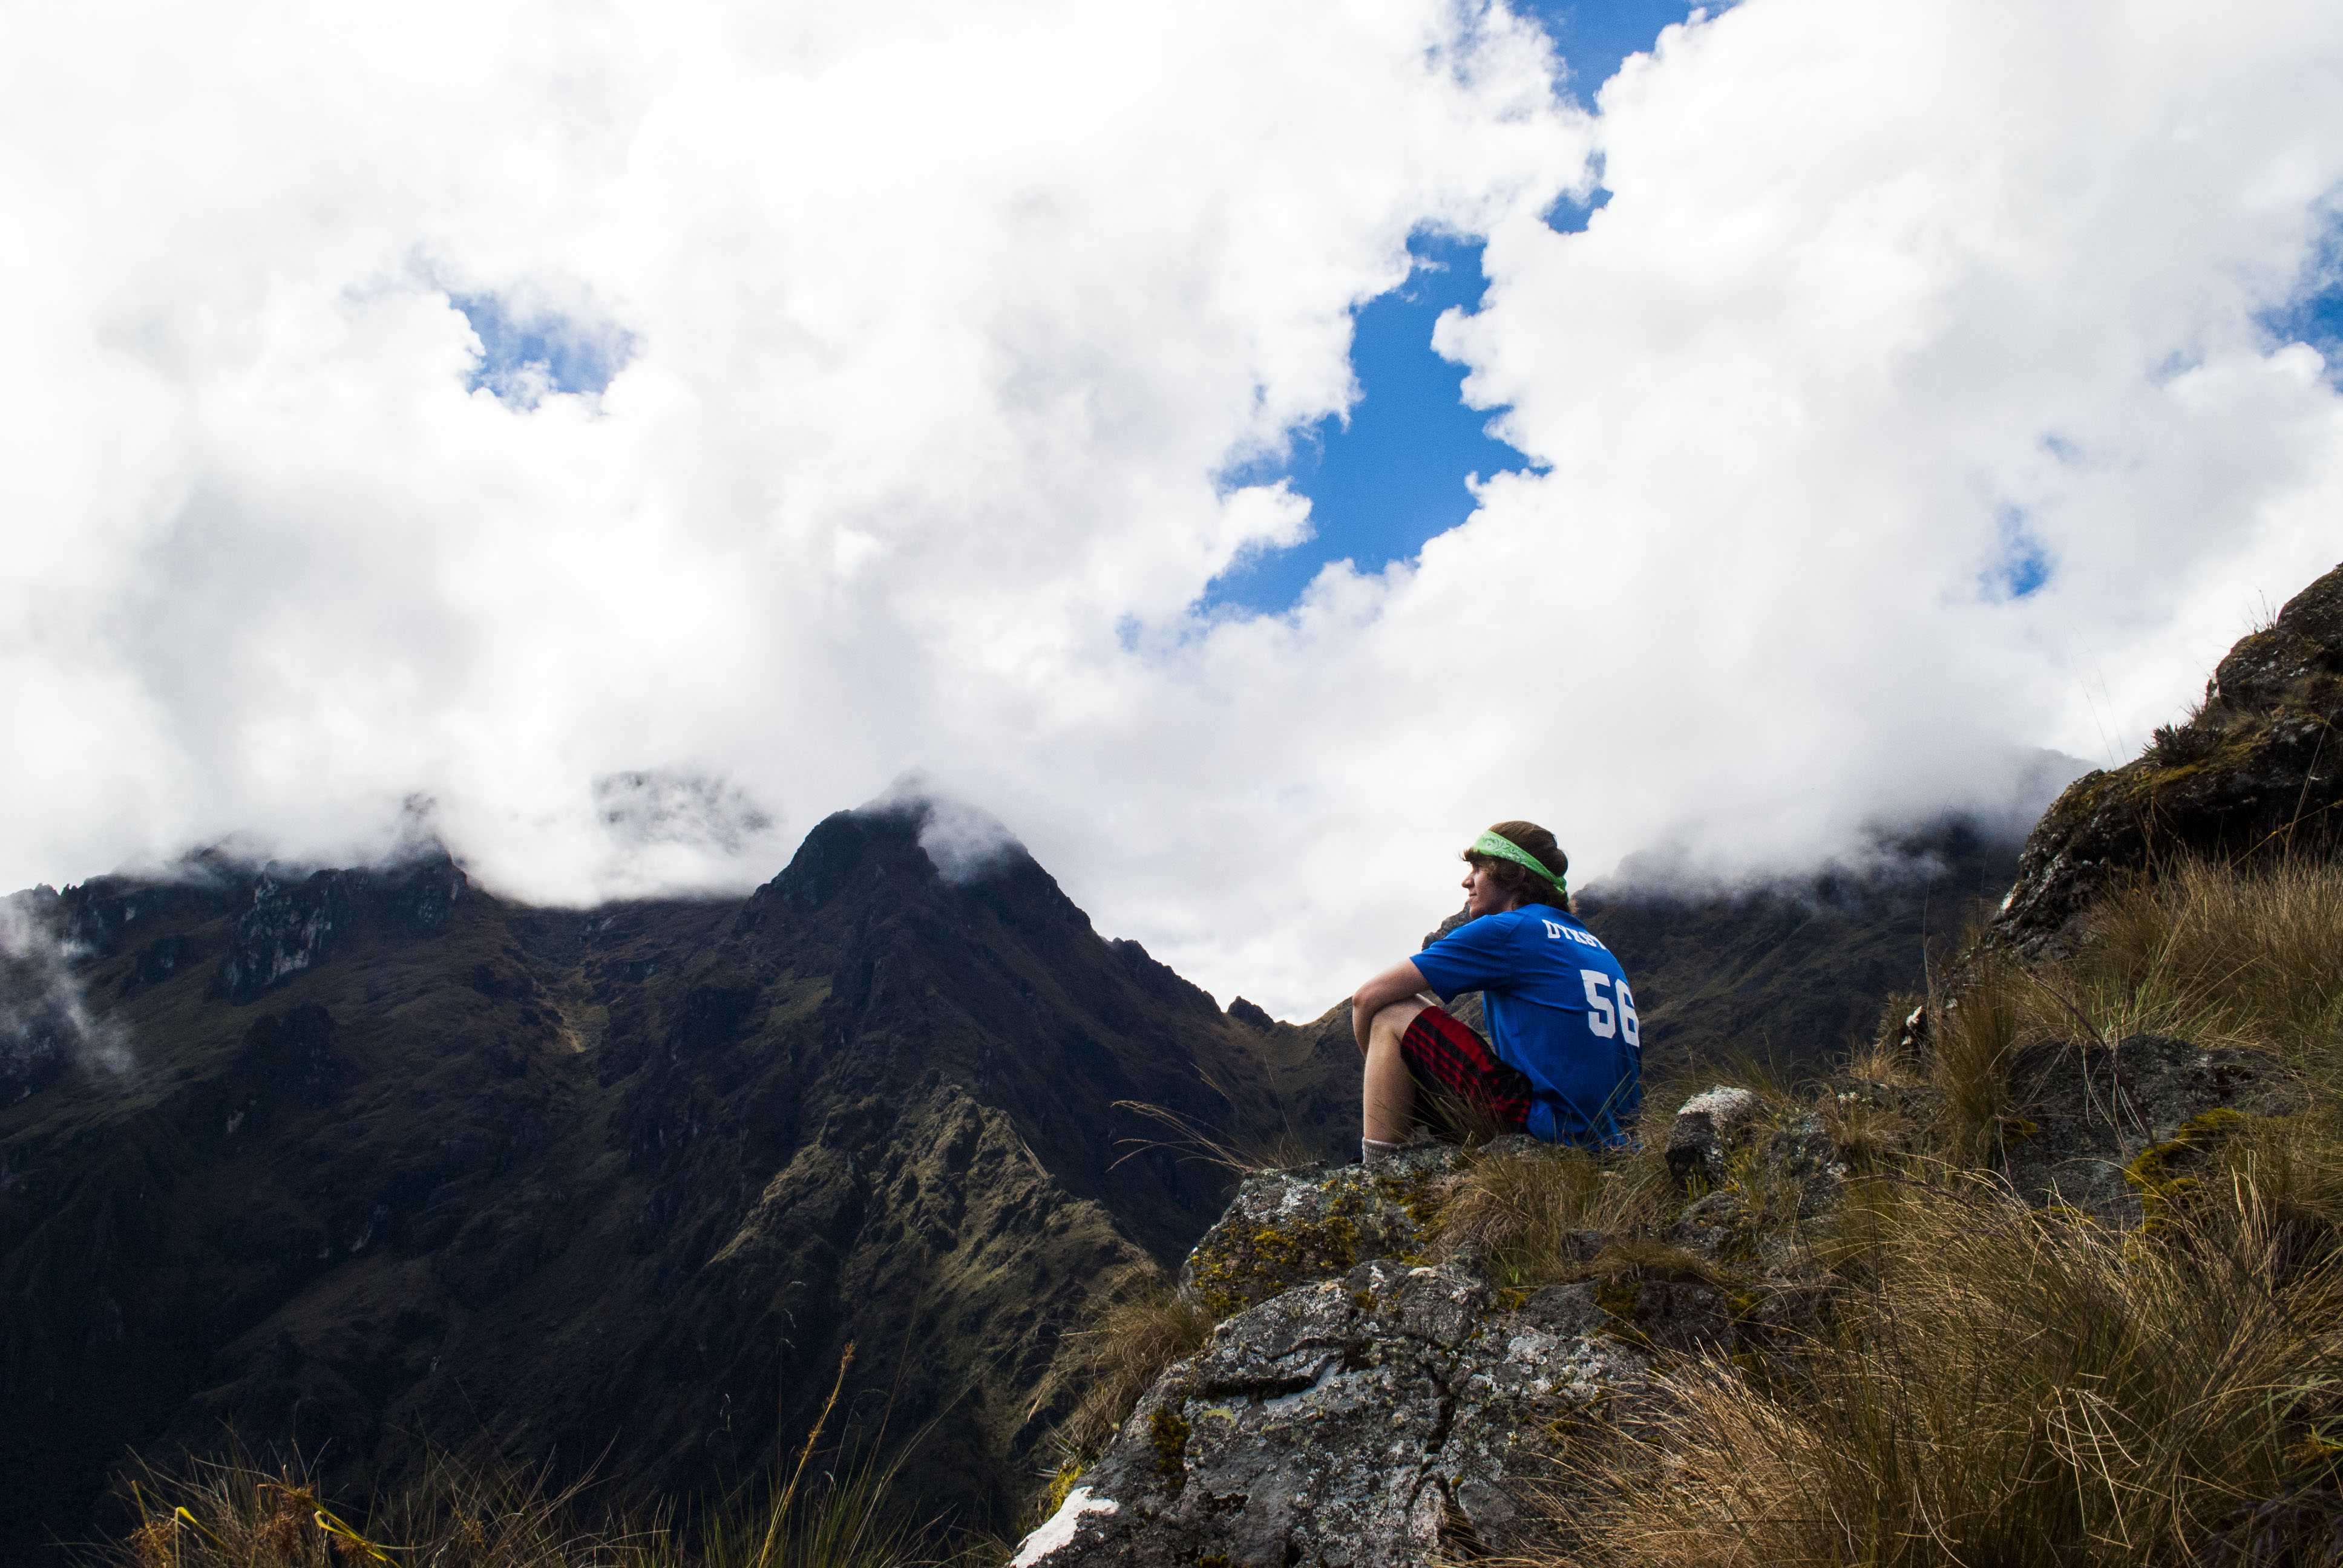 Michael exploring the Inca Trail